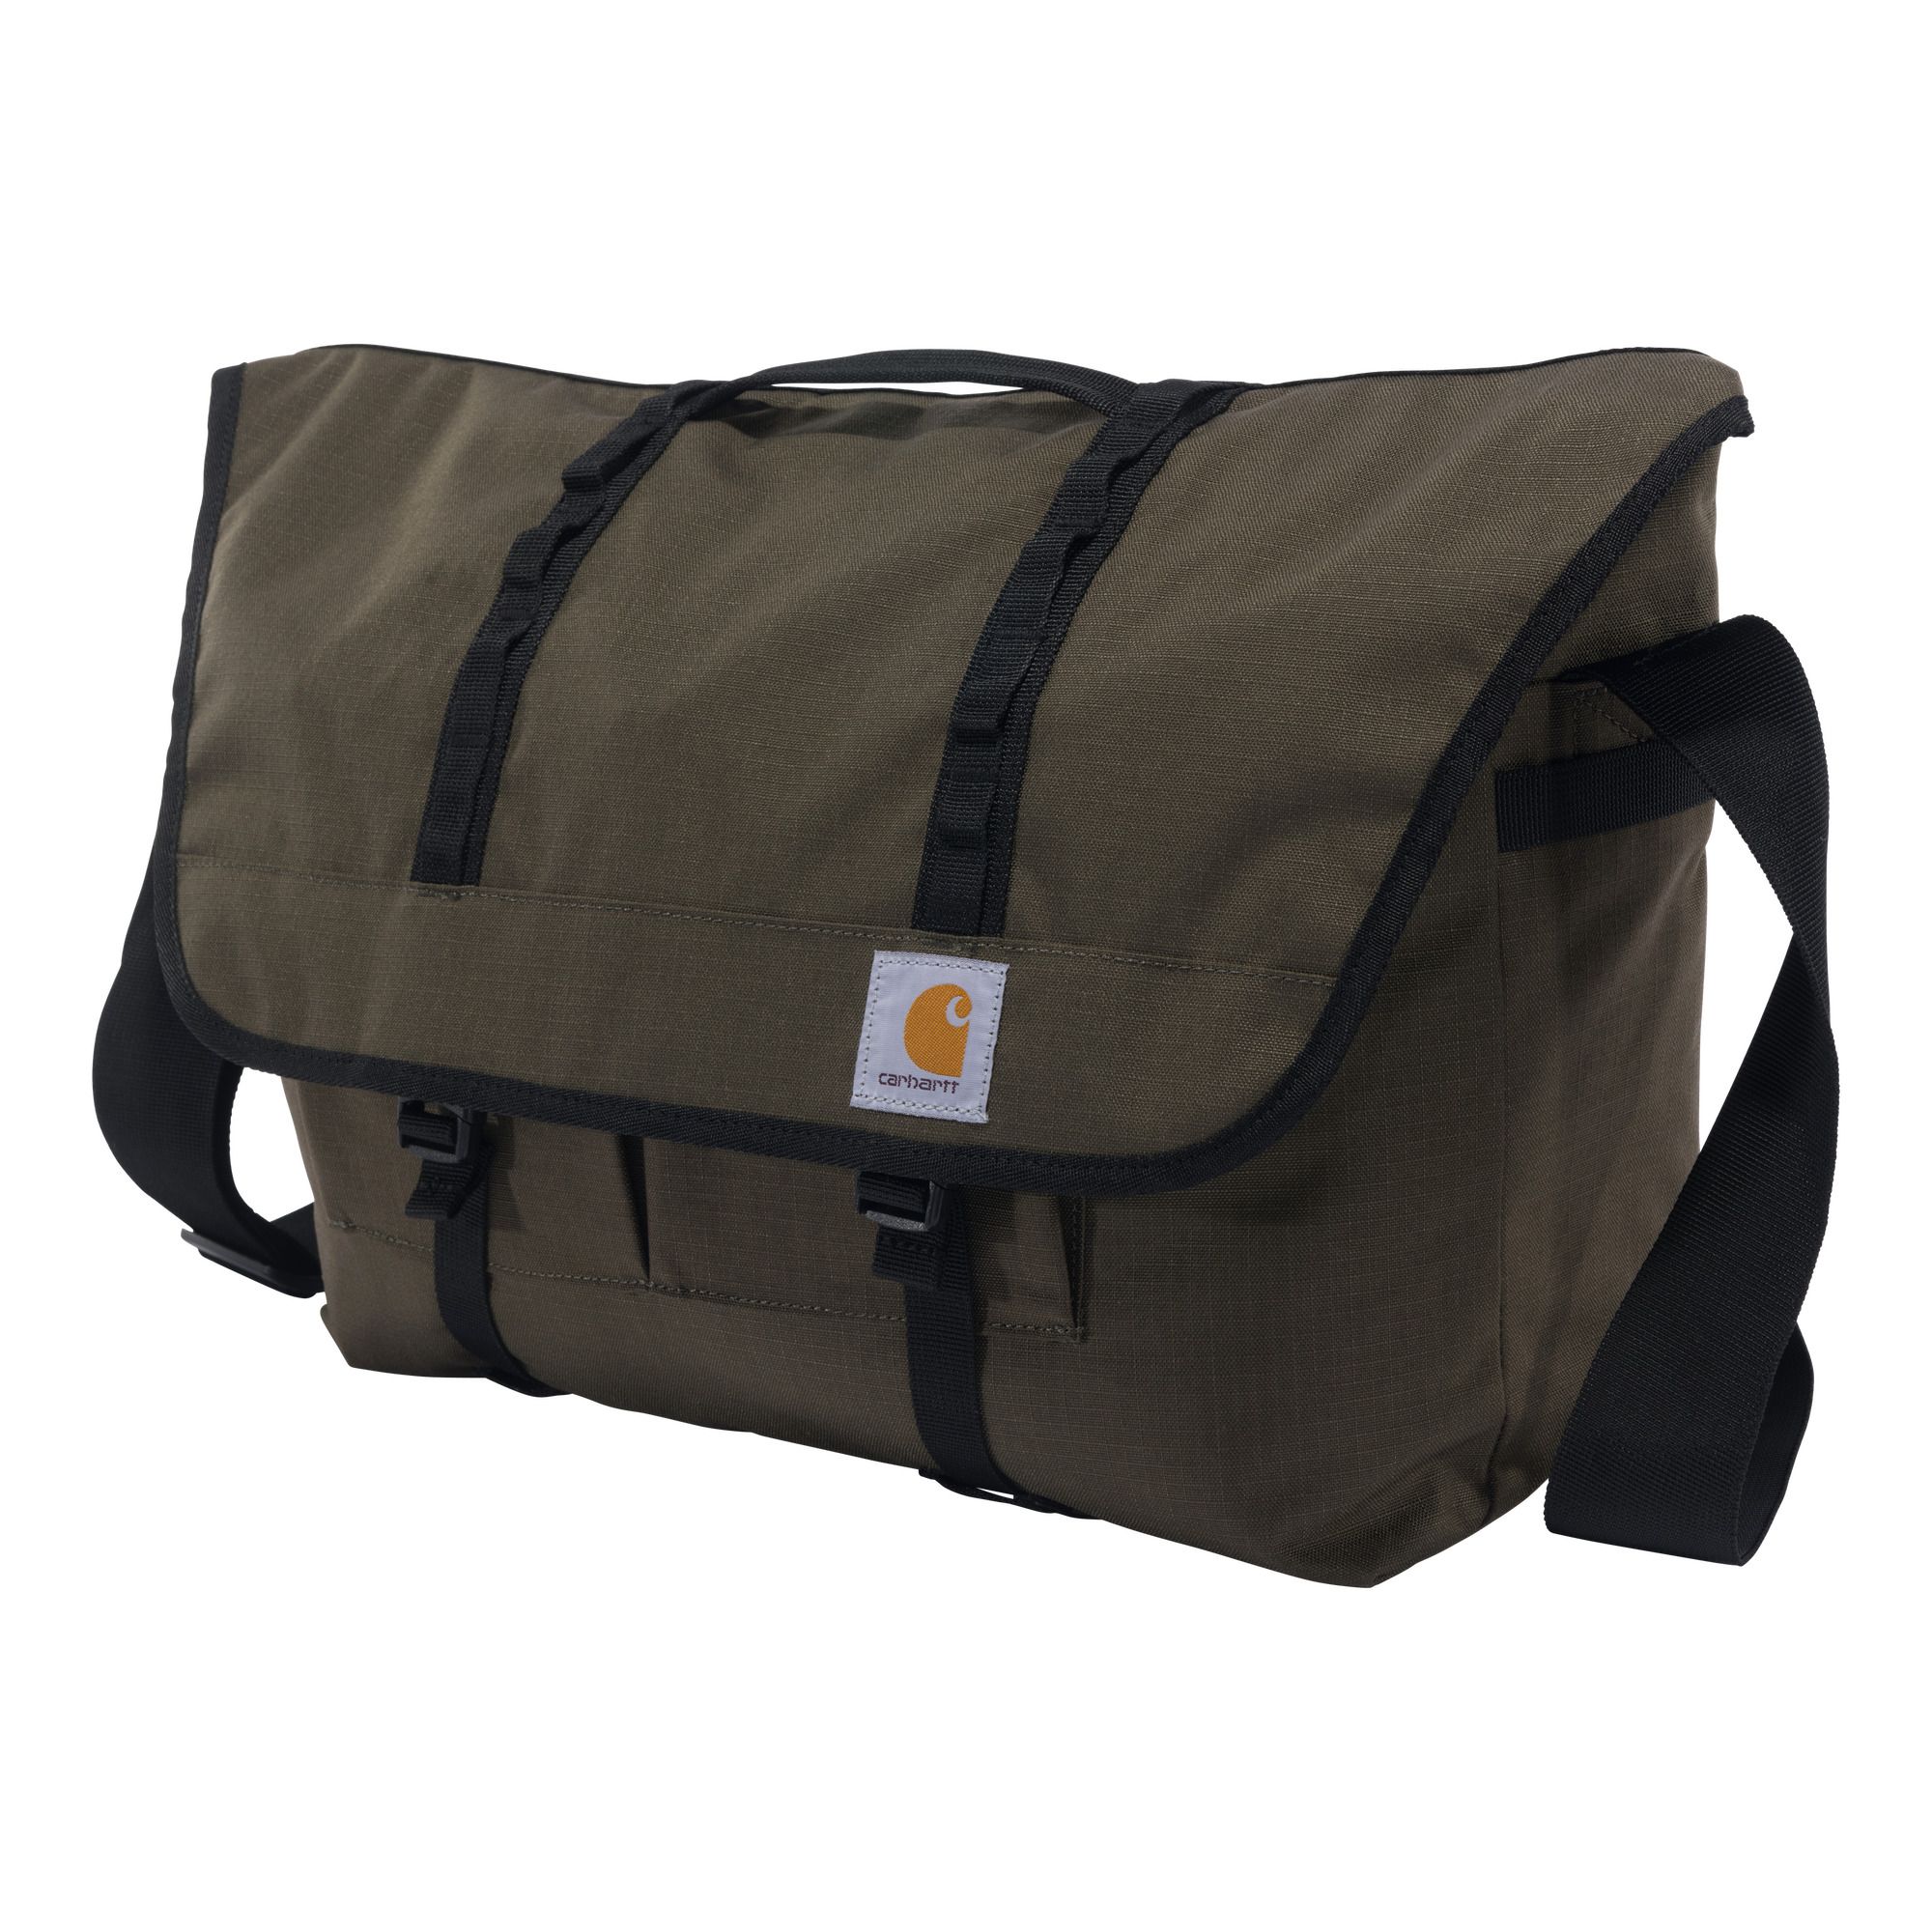  Carhartt Ripstop Messenger Bag, Durable Water